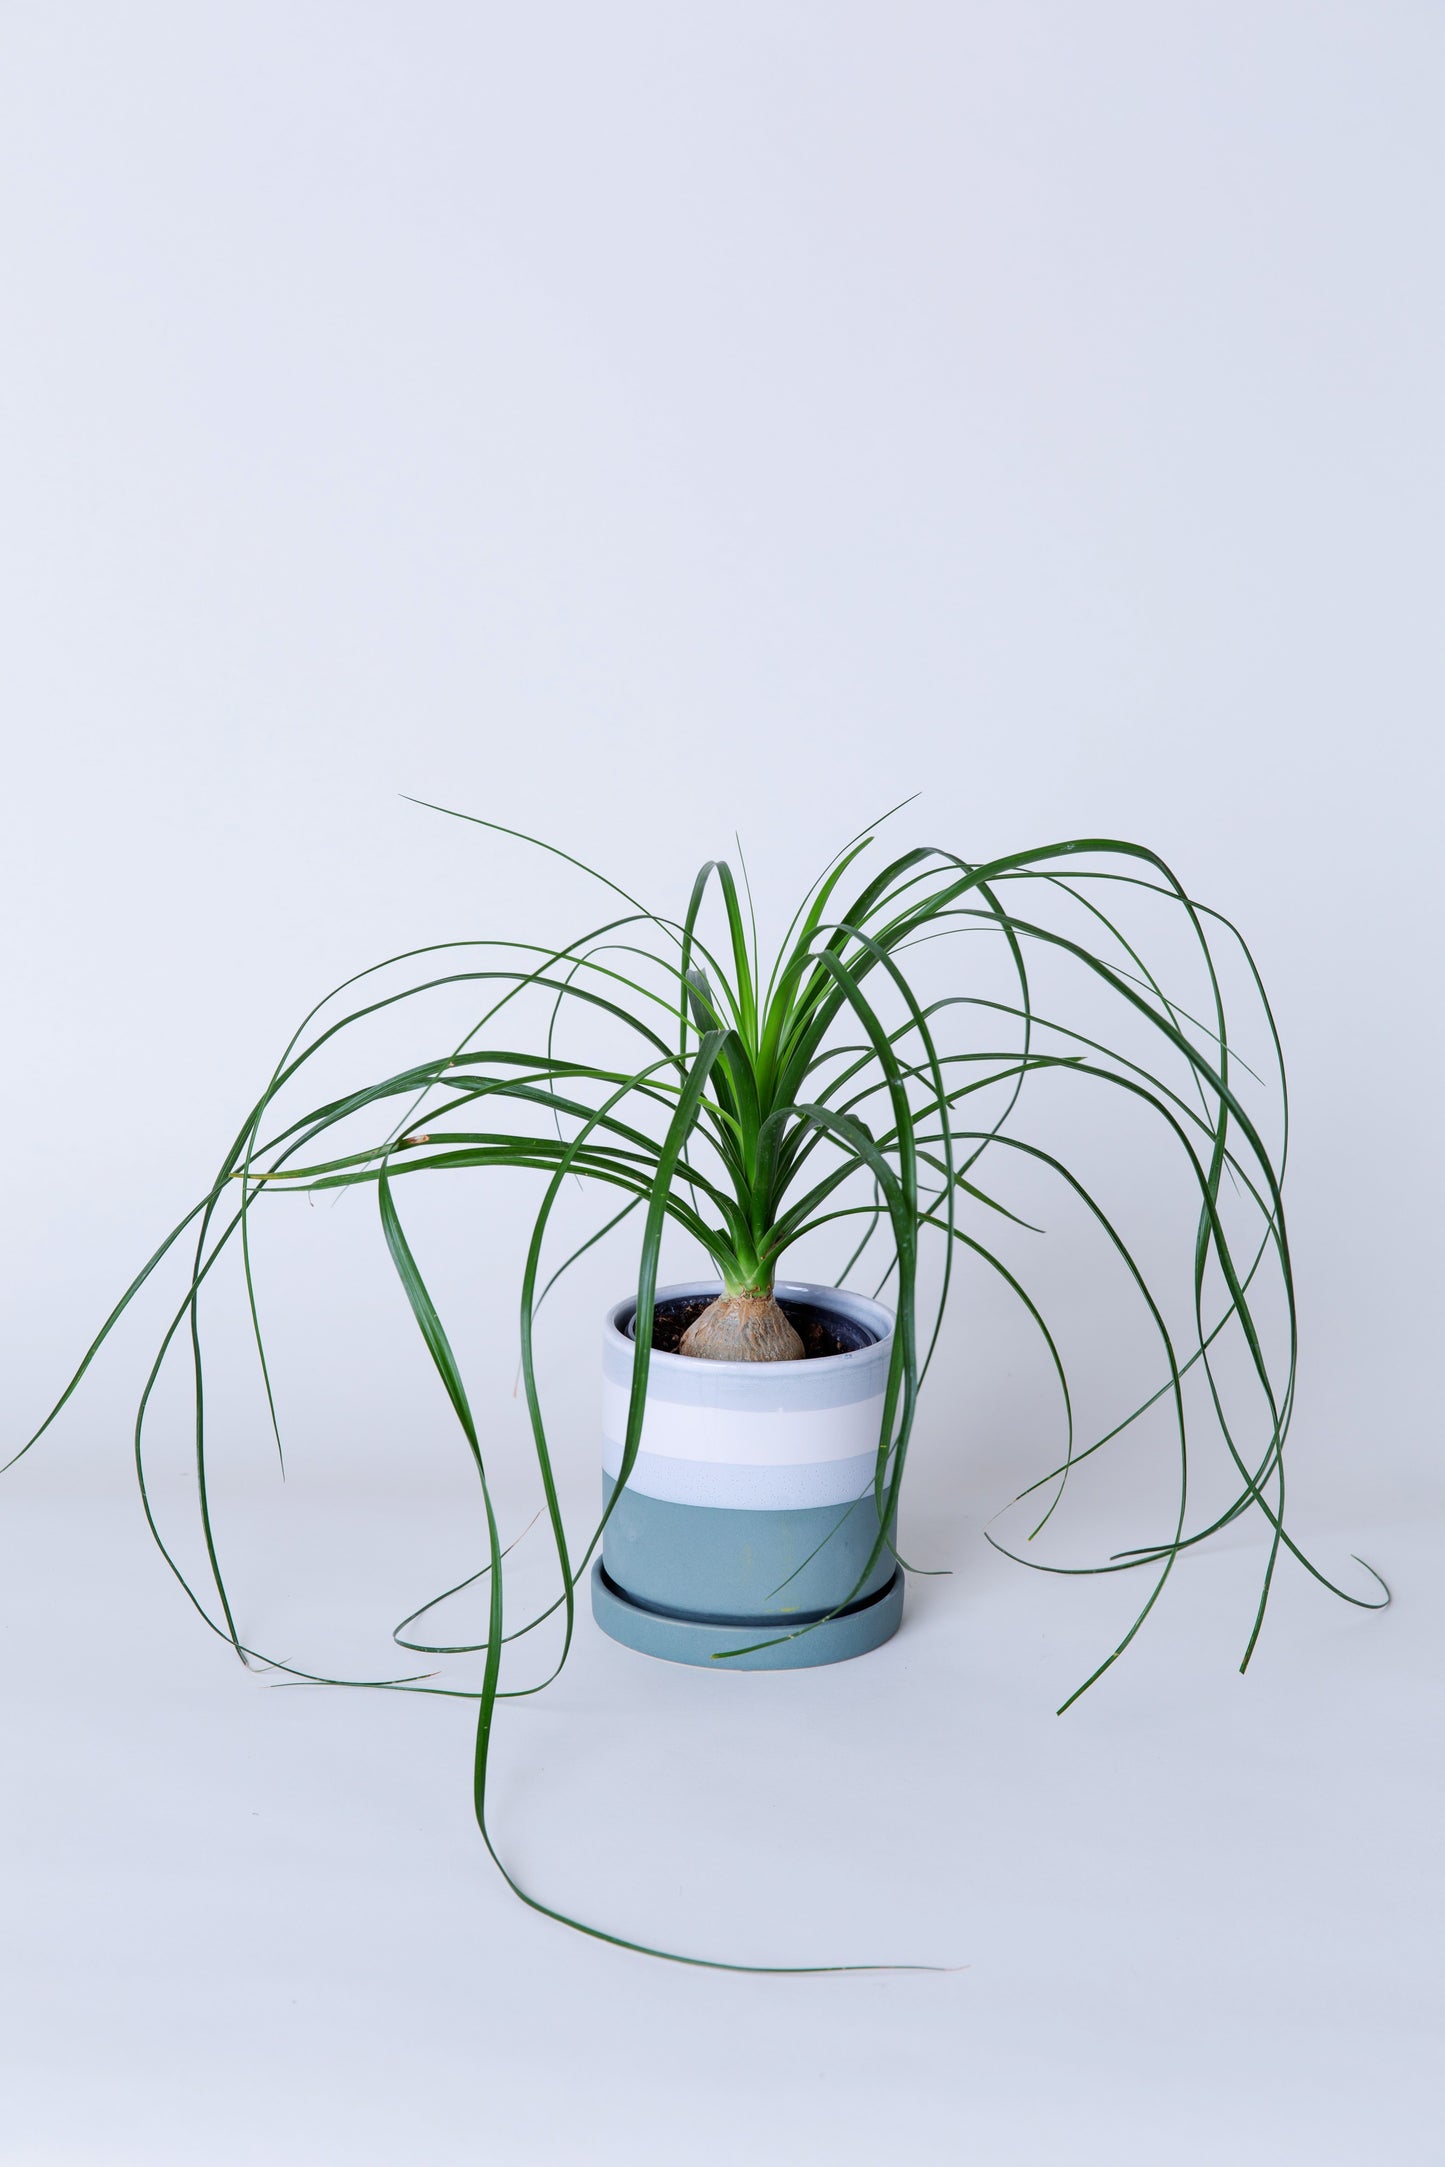 Ponytail Palm Plant(Small) | Beaucarnea Recurvata